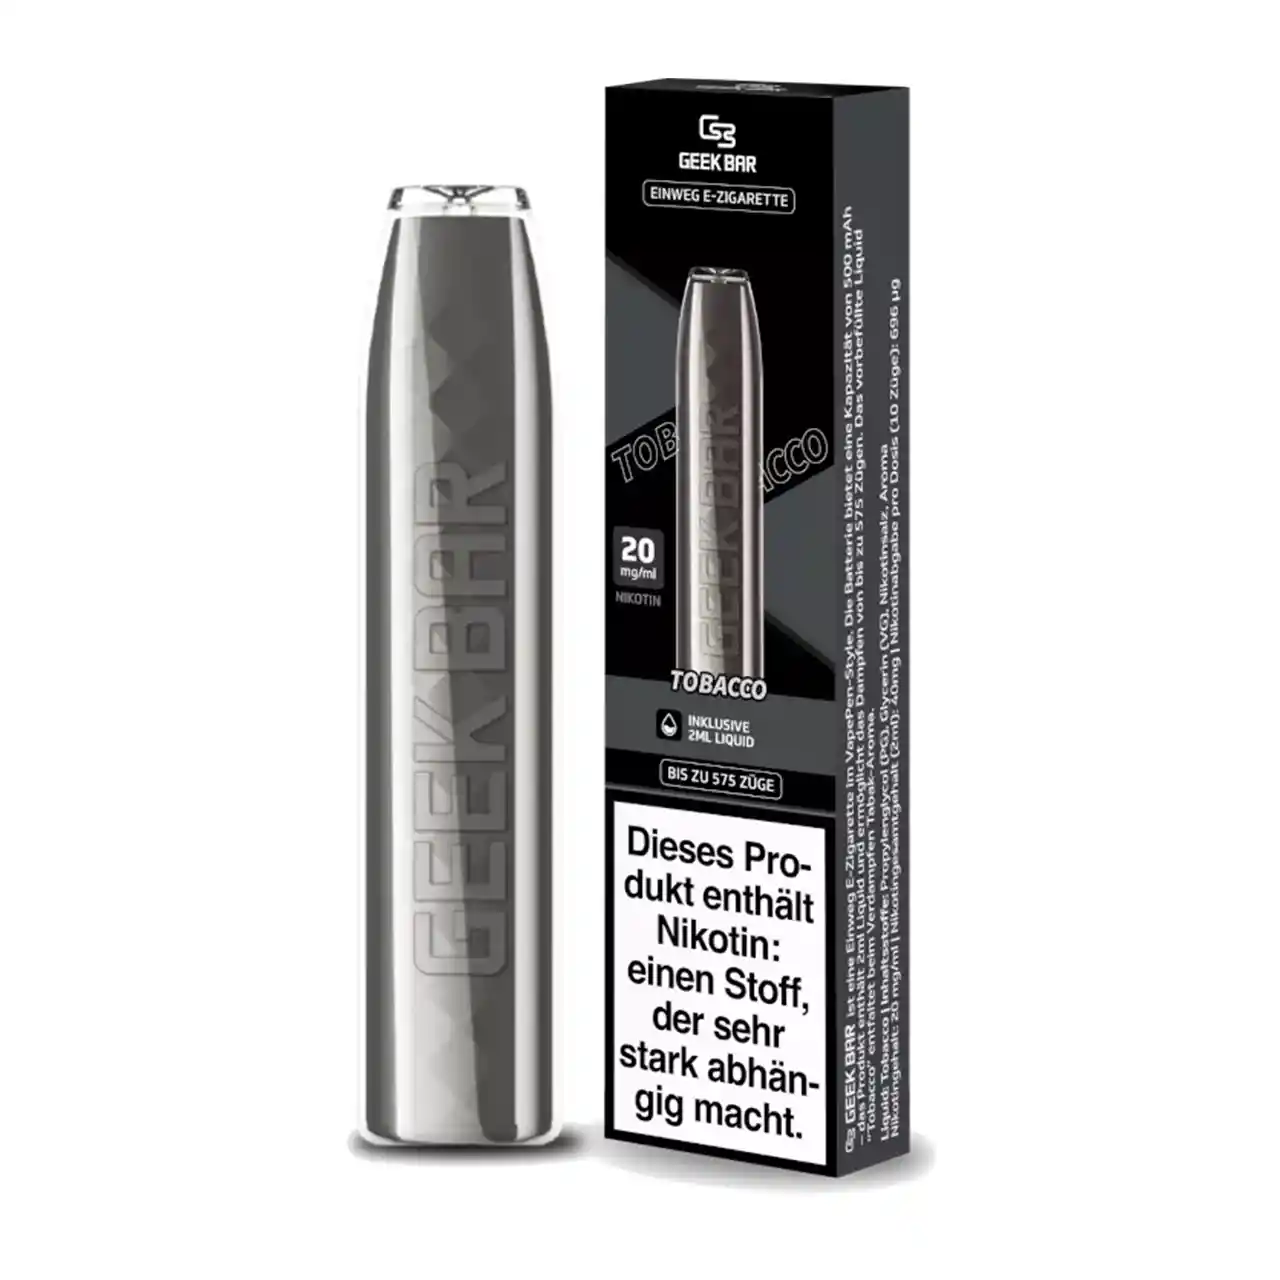 Geek Bar Tobacco Einweg E-Zigarette Verpackung